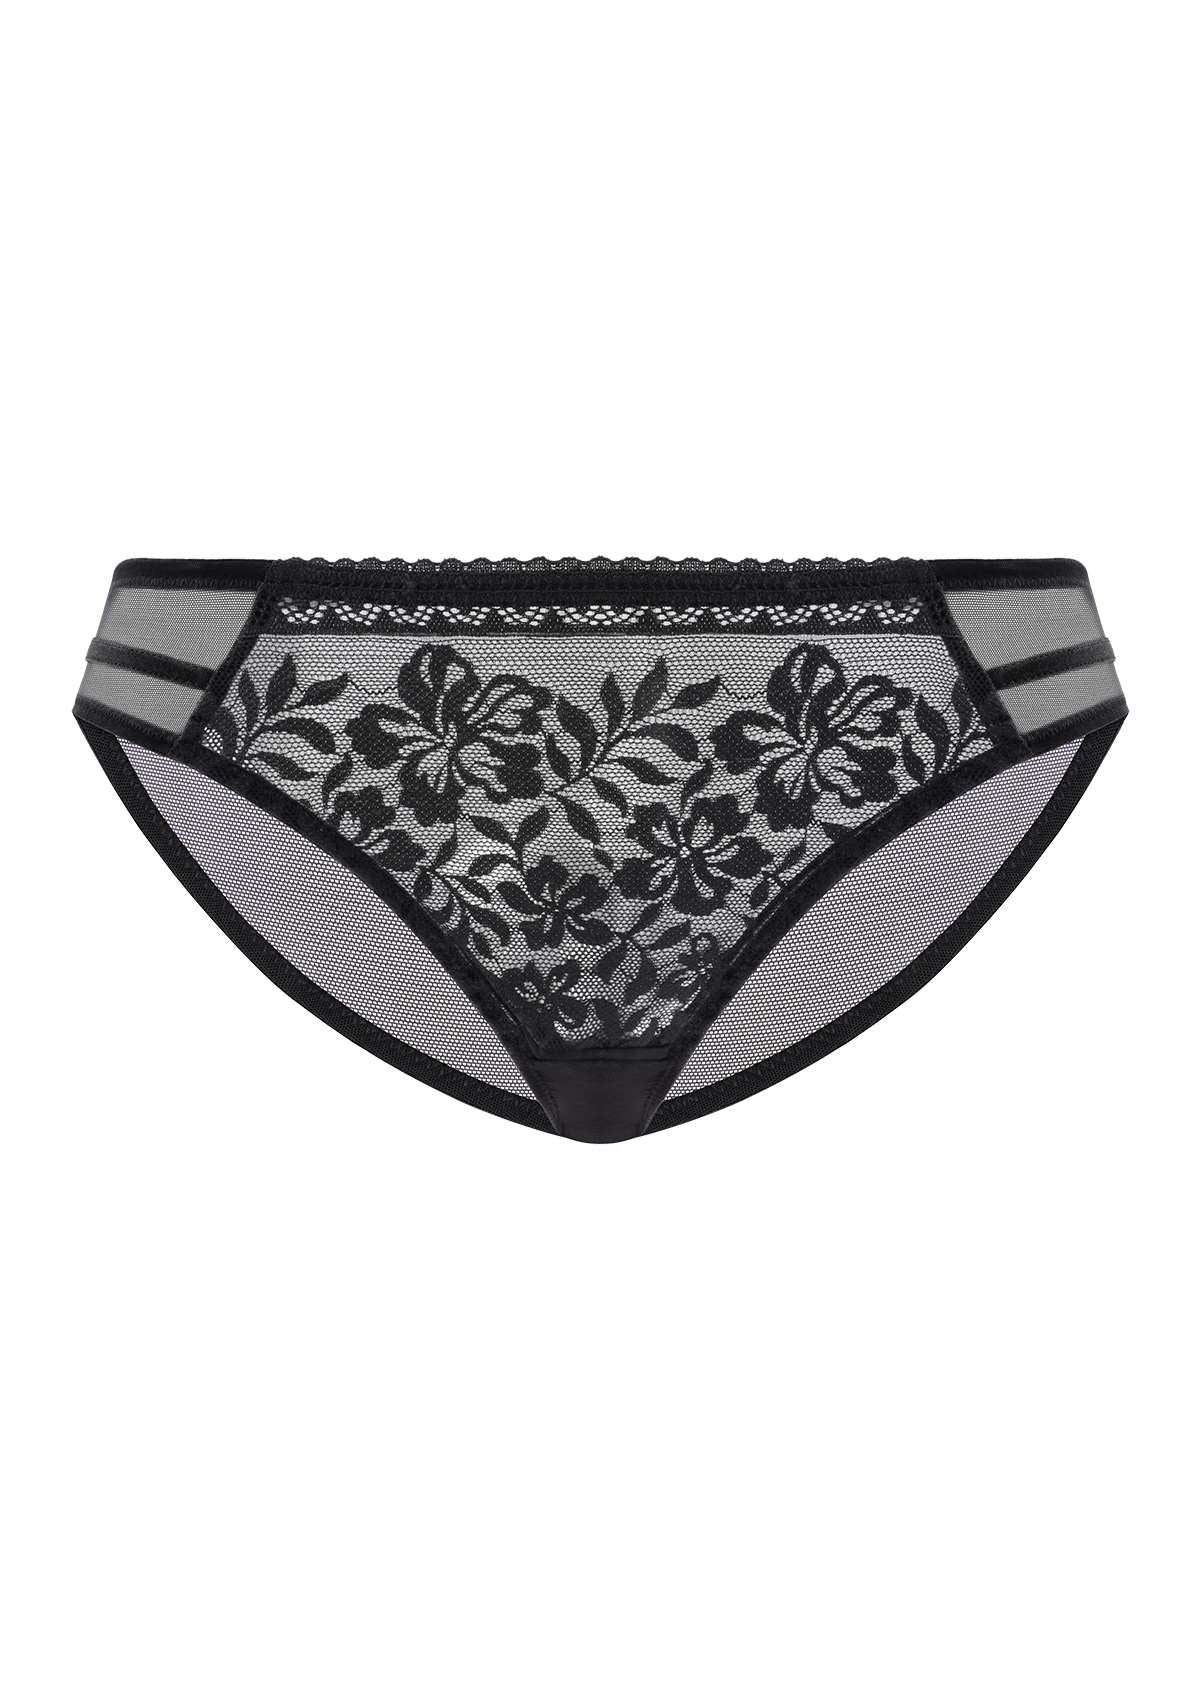 HSIA Gladioli Floral Lace Mesh Airy Elegant Beautiful Bikini Underwear - L / Black